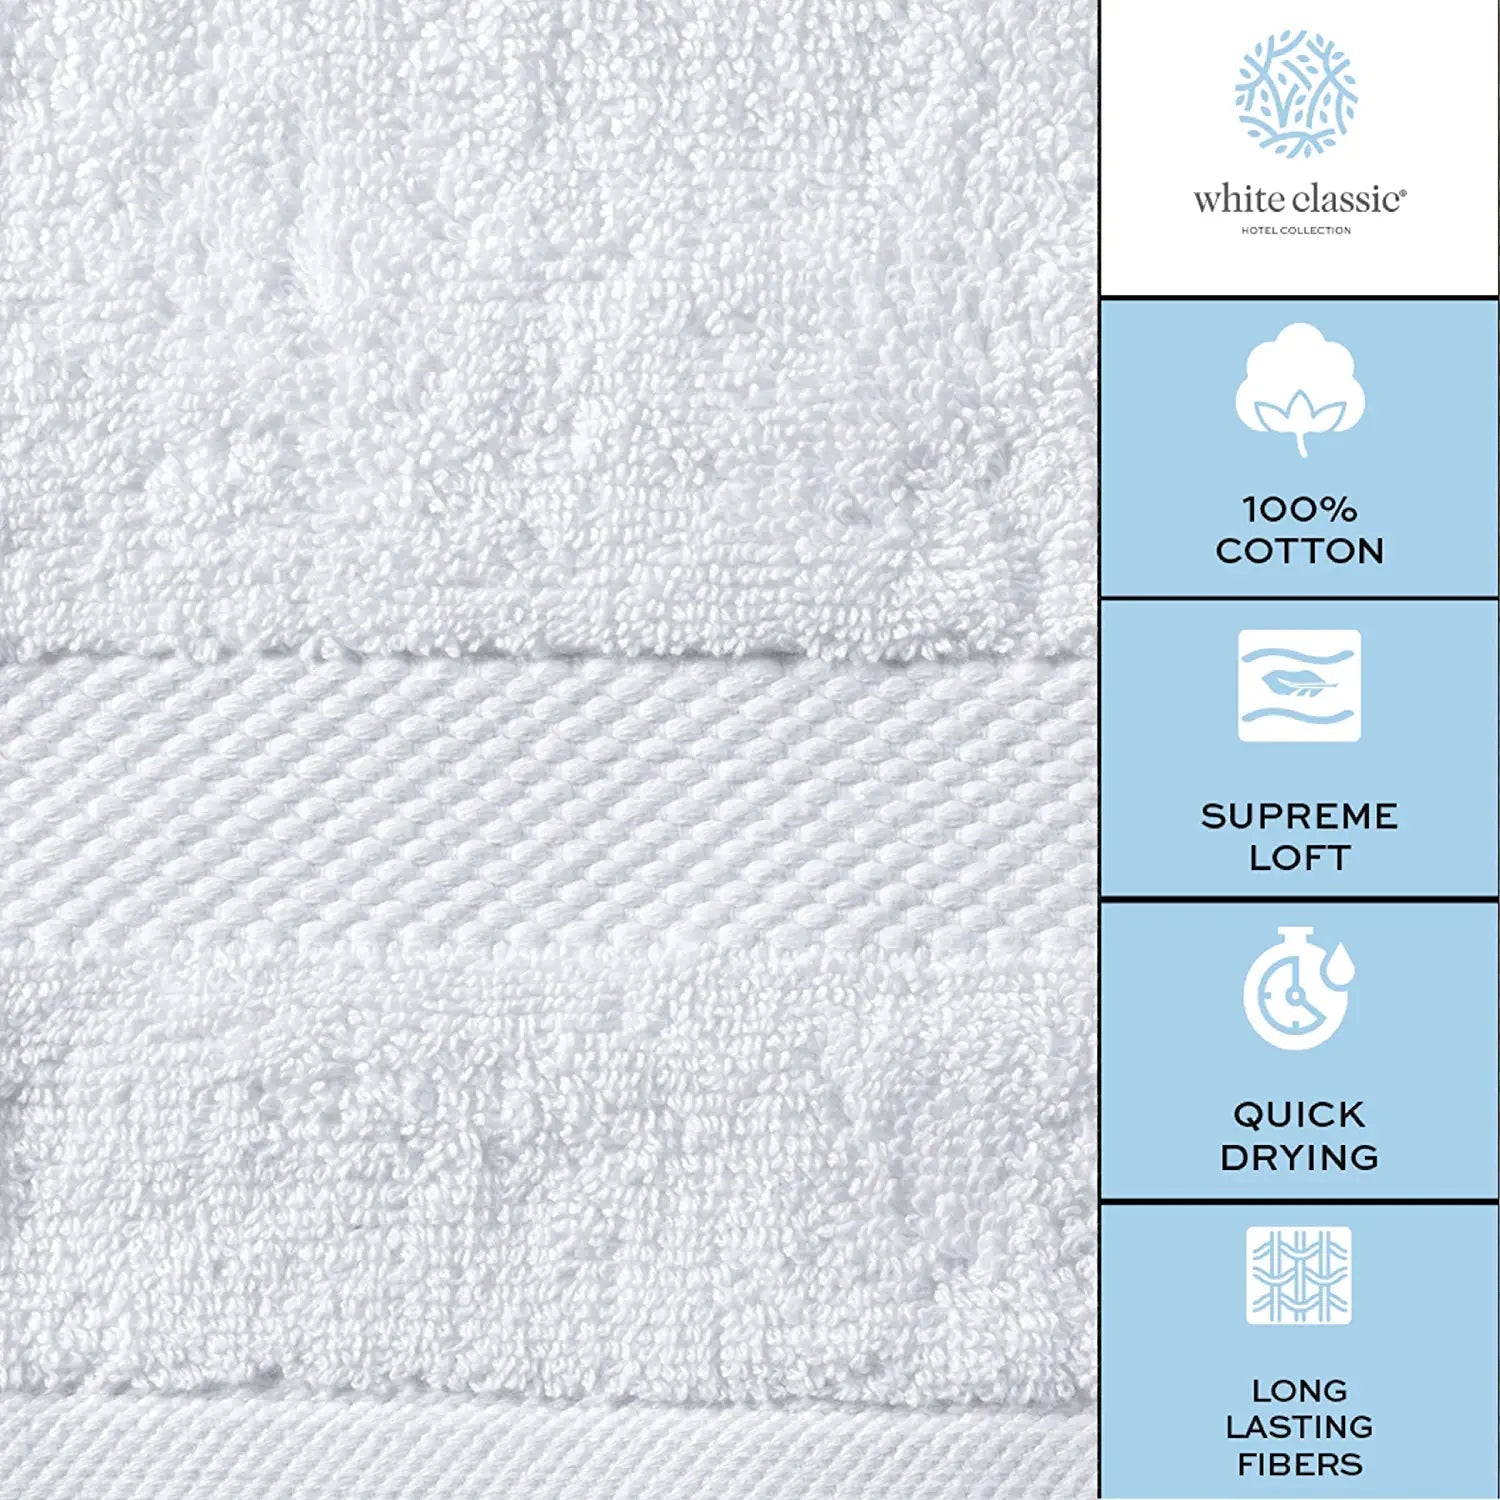 100% cotton bath sheets